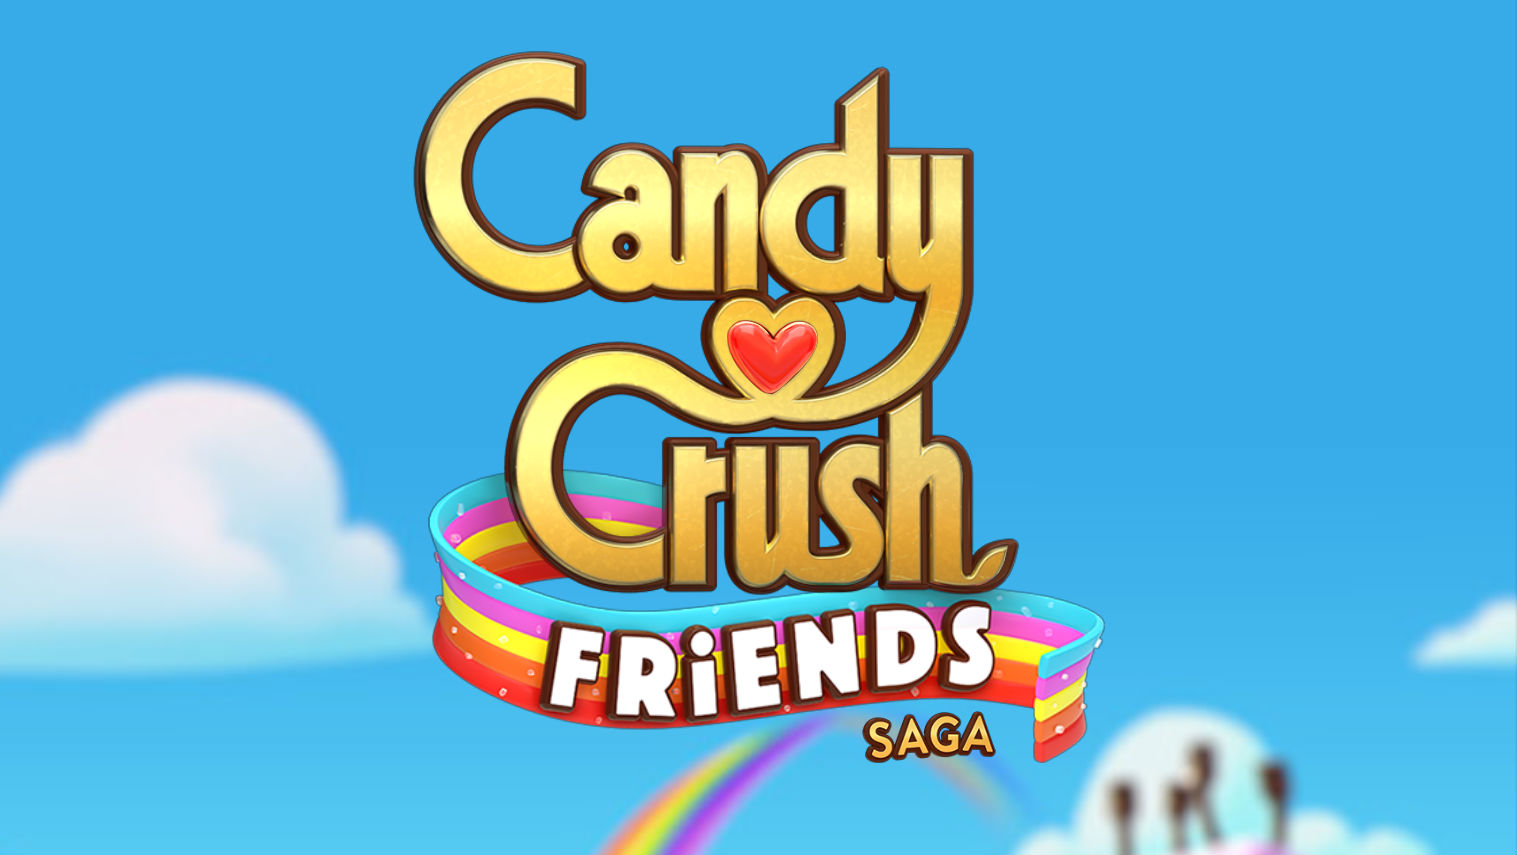 candy crush friends saga header